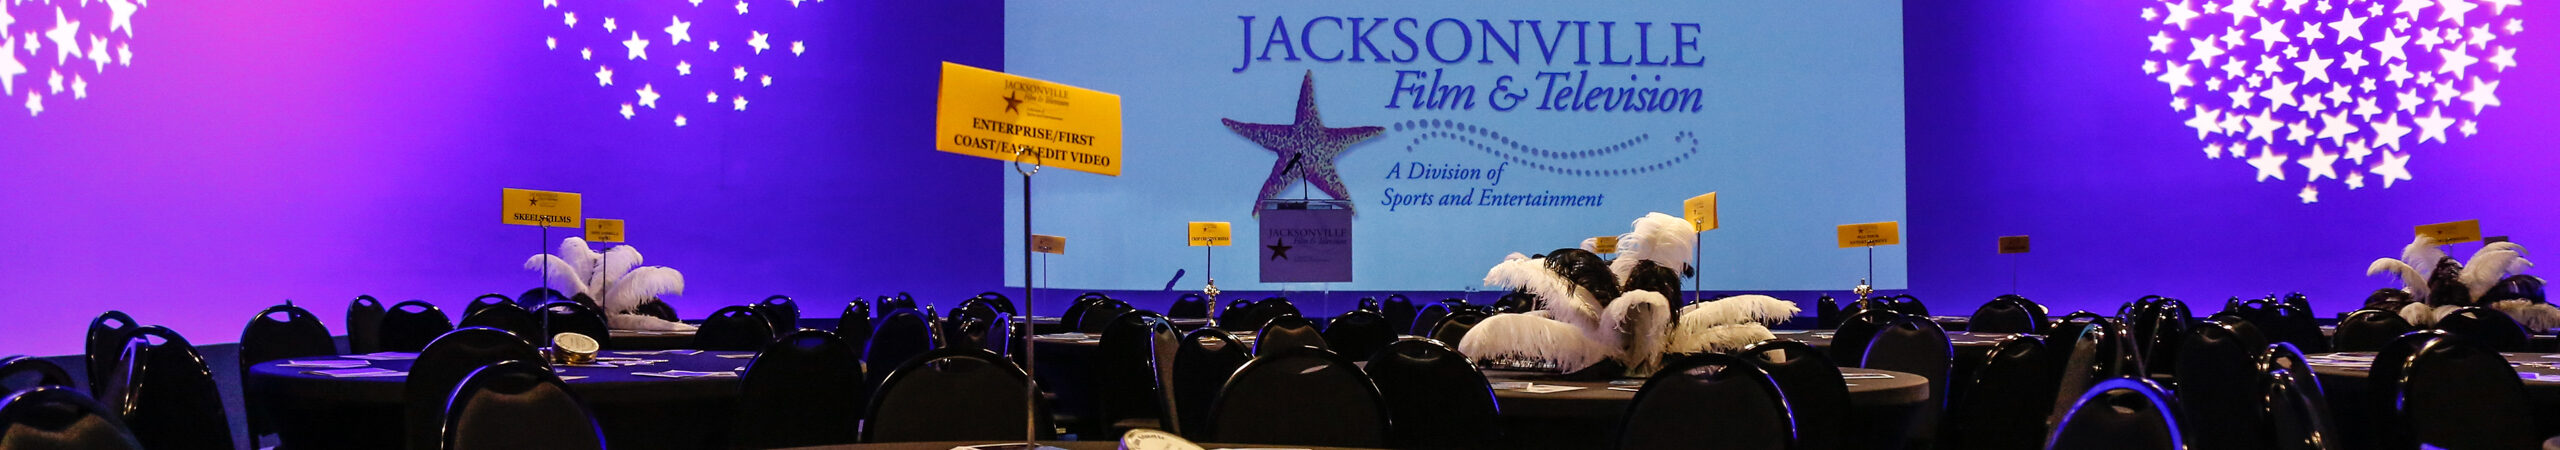 Jacksonville Film & Television Reception